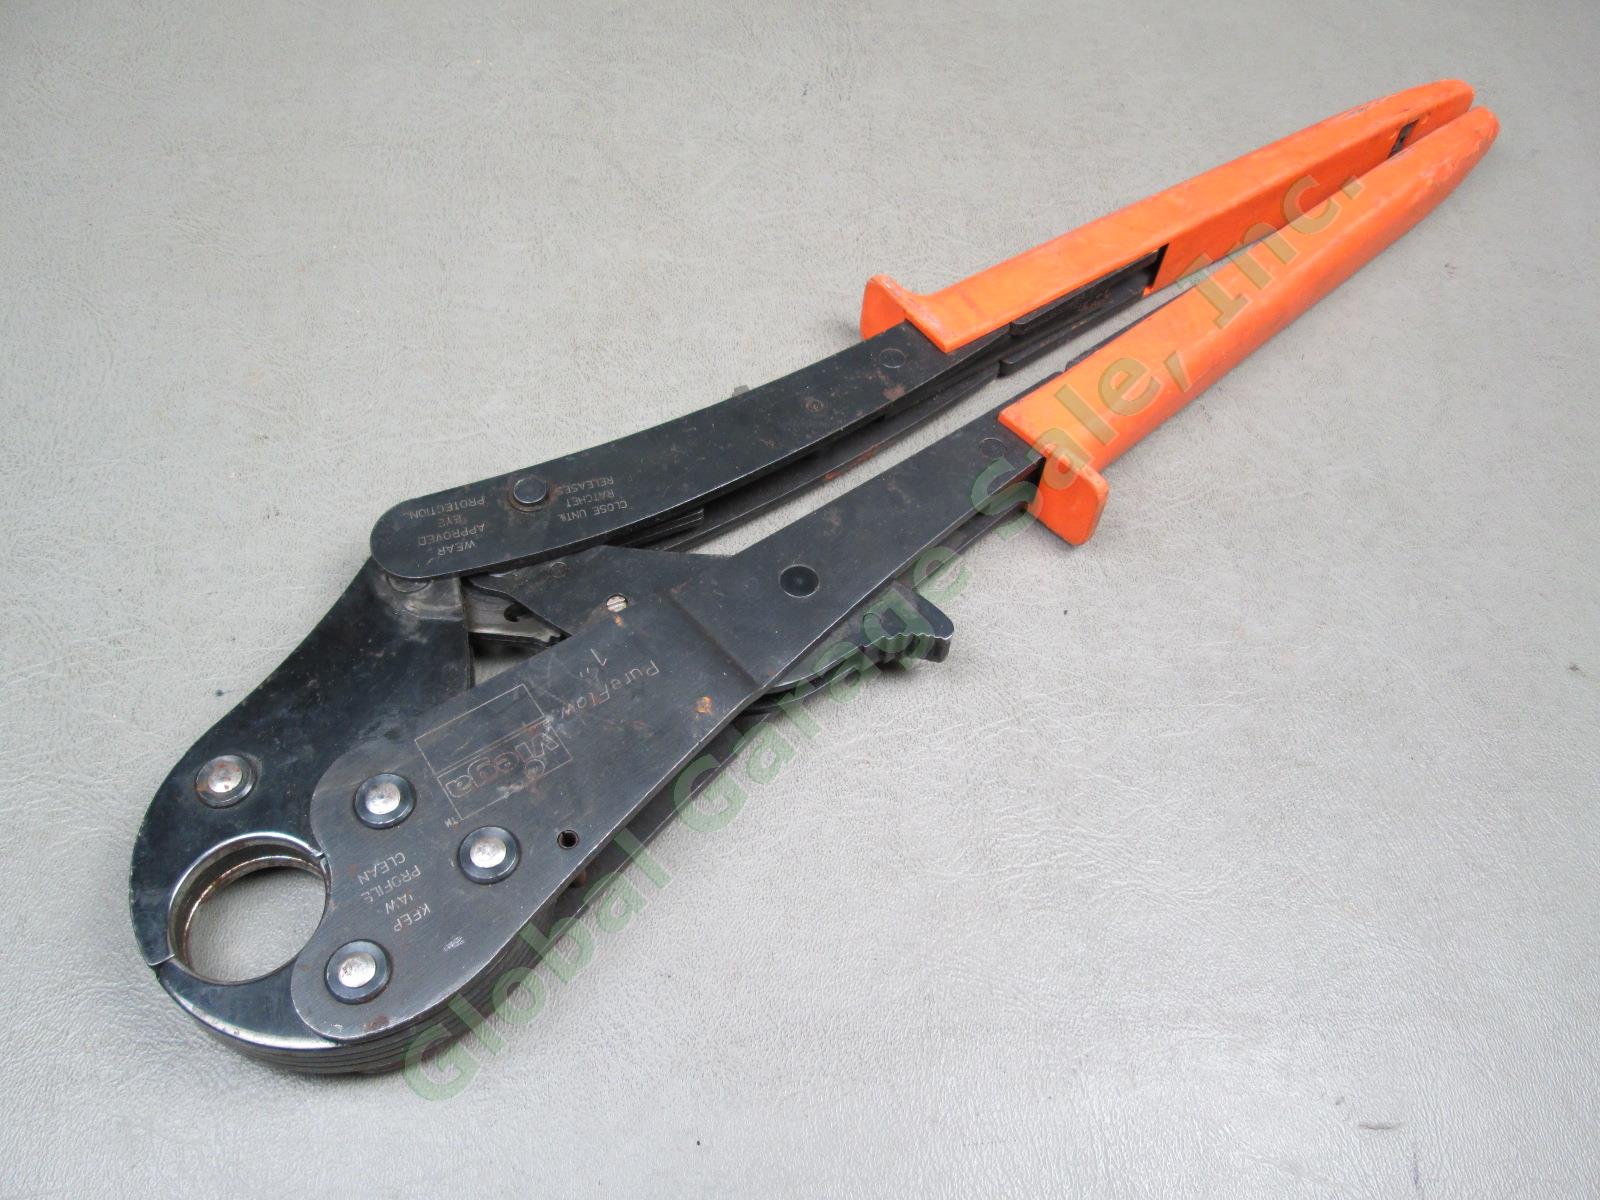 Viega PureFlow 1" PEX Press Tool Ratcheting Plumbing Crimper Orange Handle 50060 1